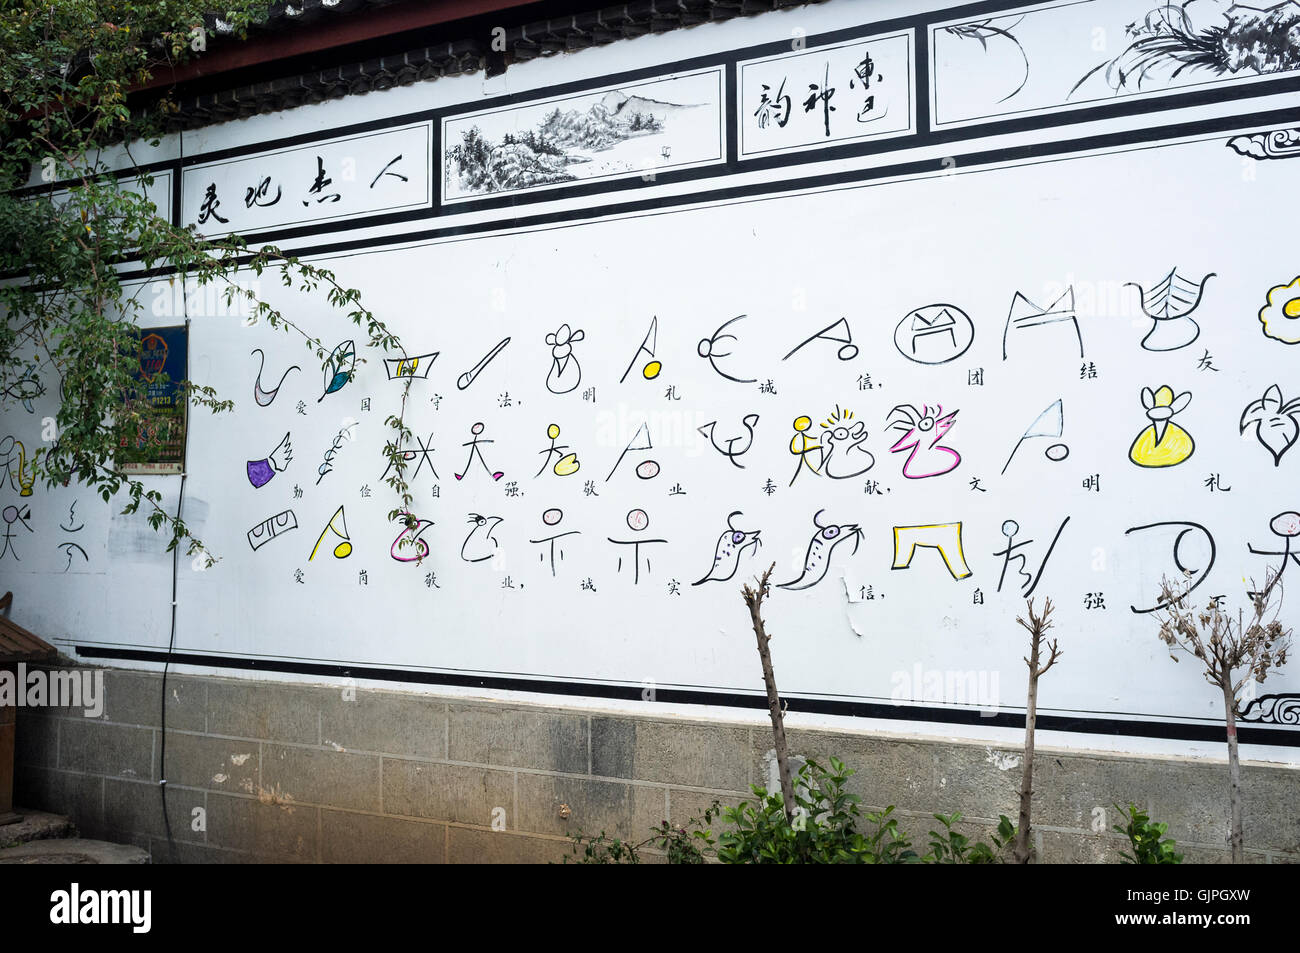 A wall in Lijiang's Old Town showing the traditional Geba (Dongba) alphabet of the Naxi minority, Lijiang, Yunnan, China. Stock Photo